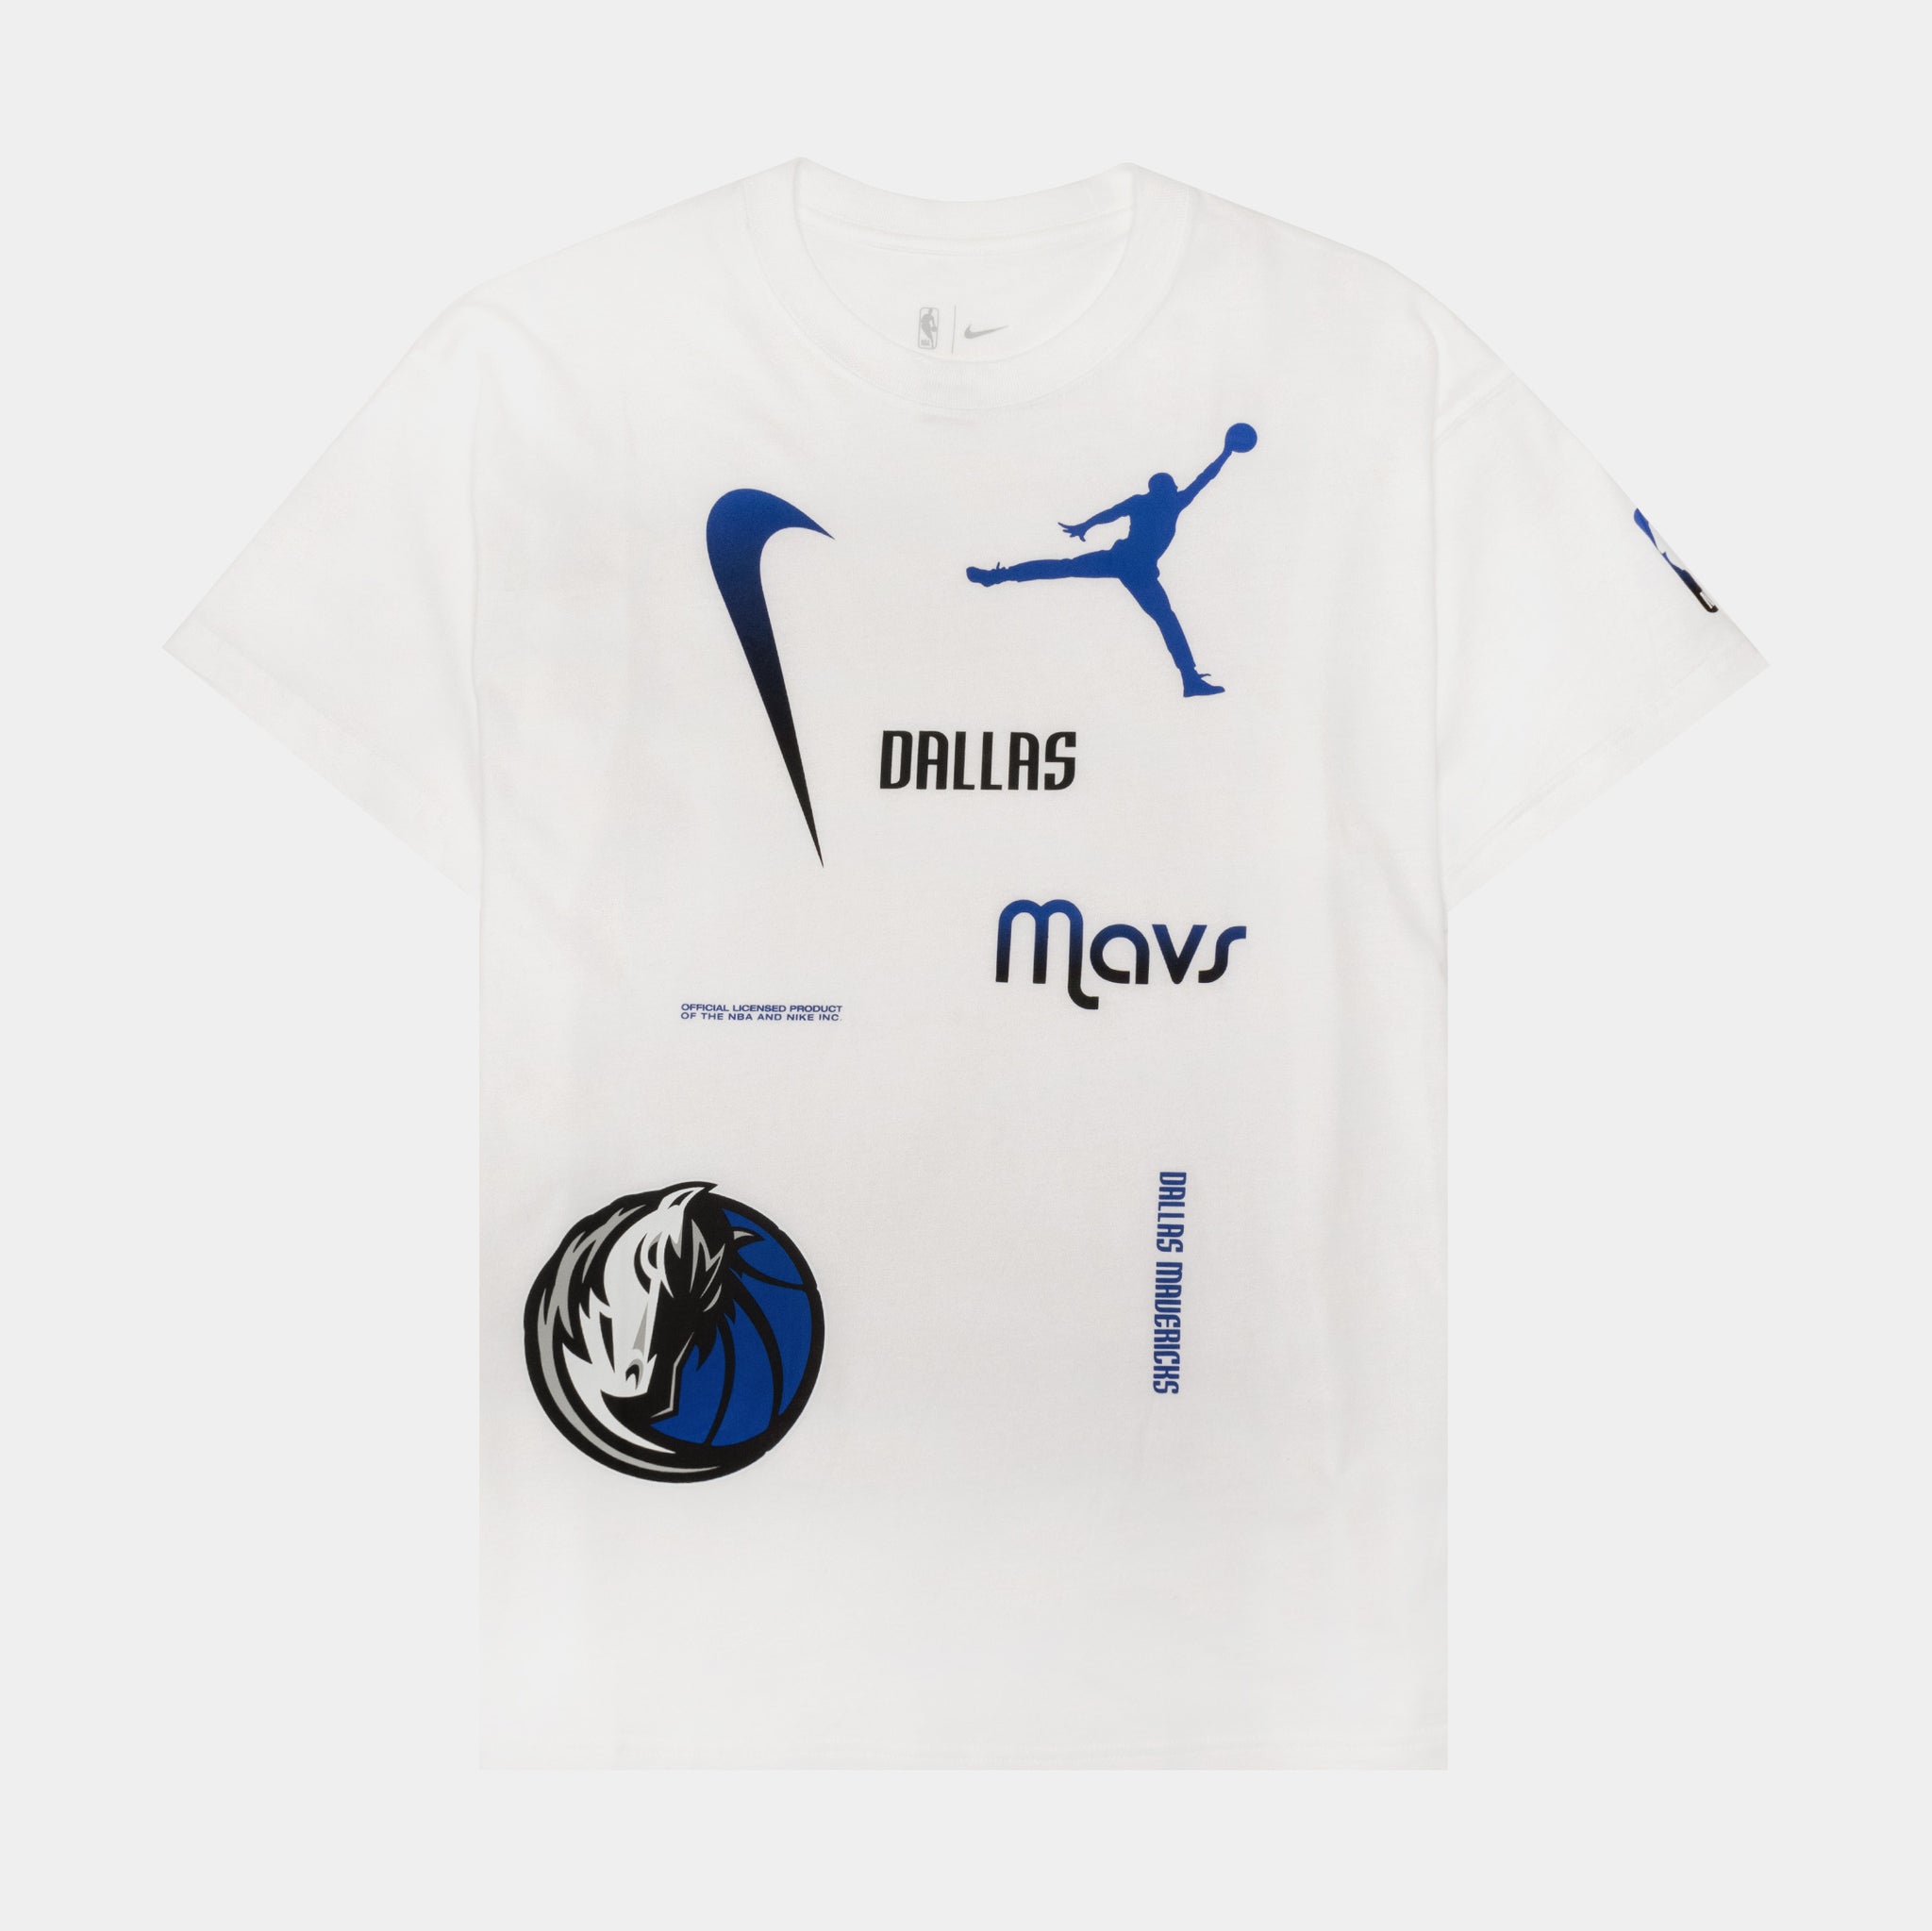 Outerstuff Nike Youth Dallas Mavericks Royal Club Logo Fleece Sweatshirt, Boys', Small, Blue